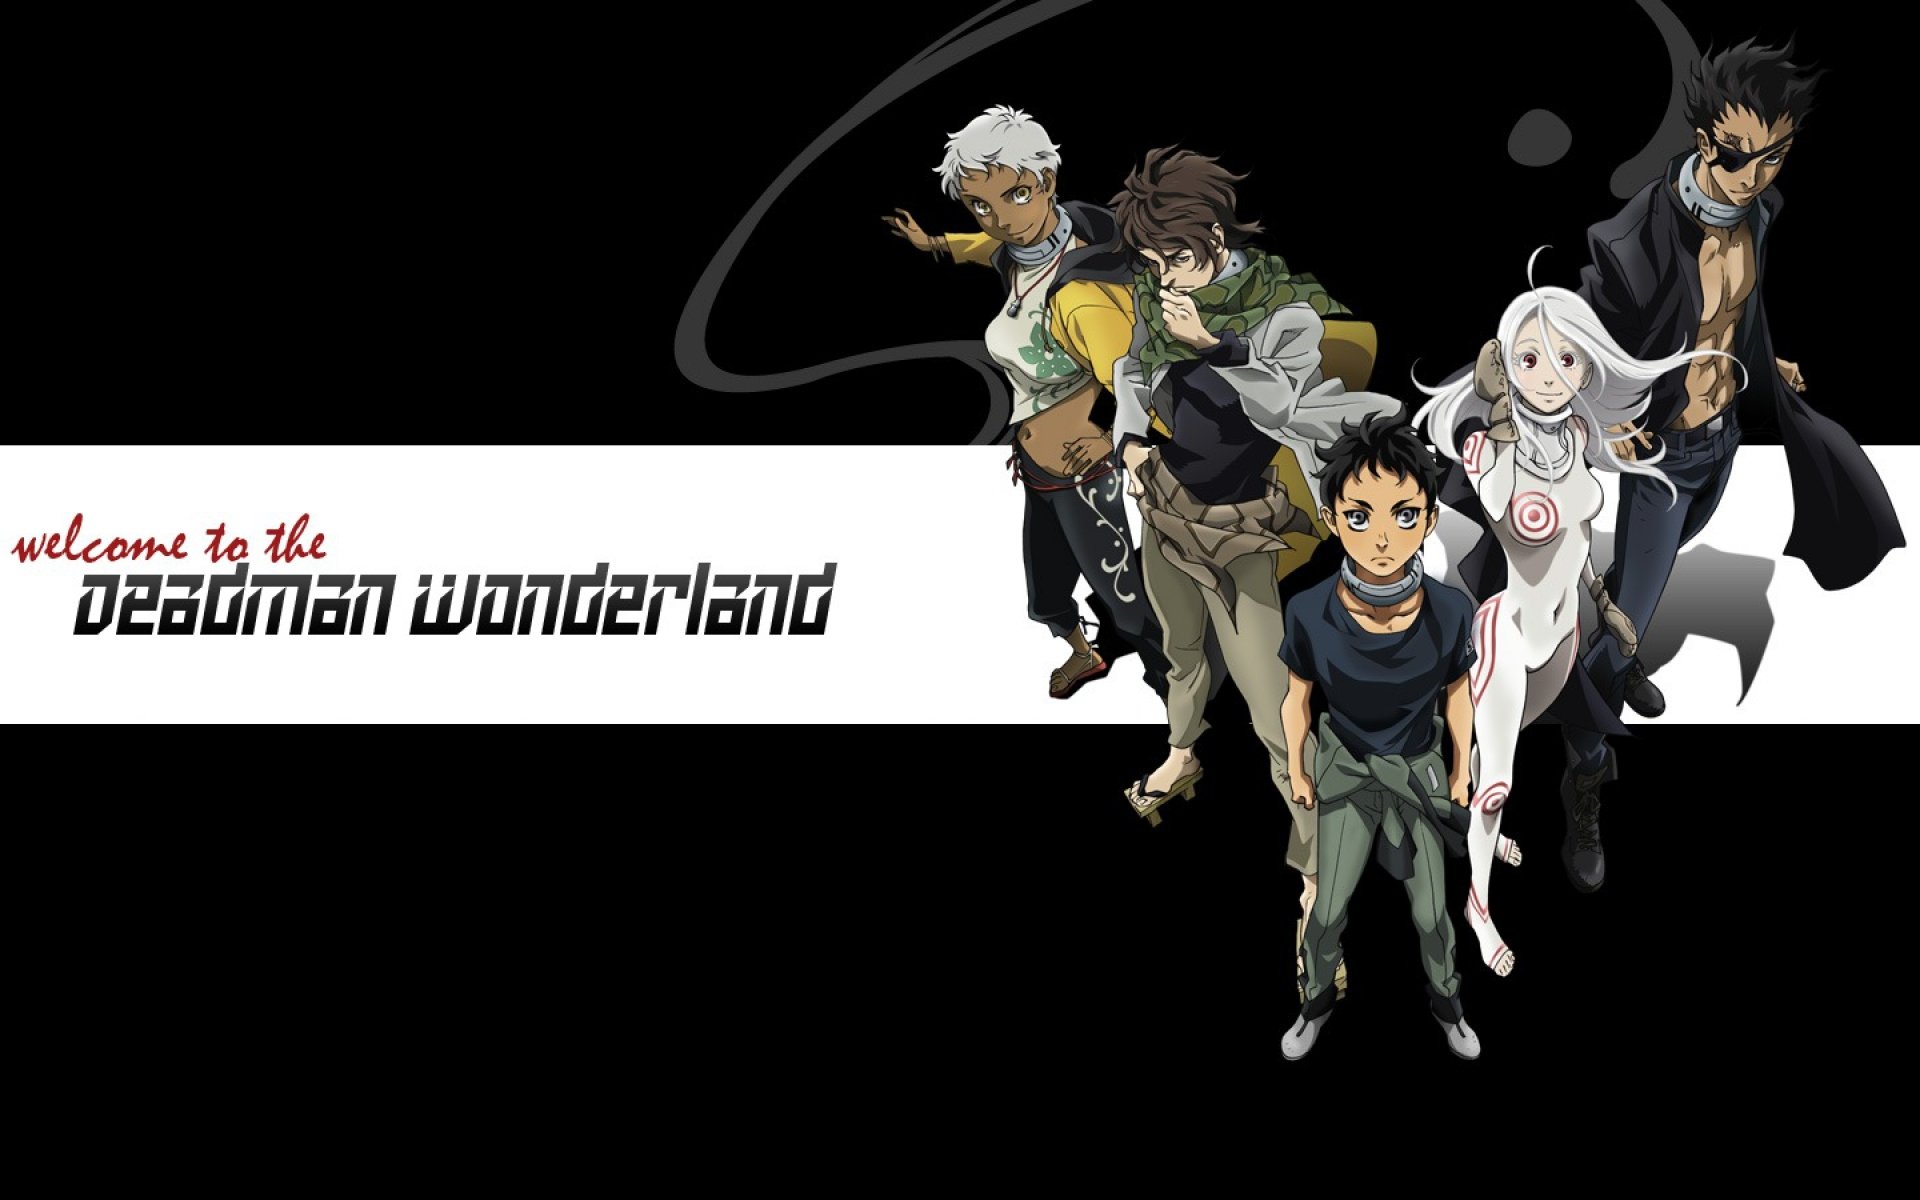 Anime Deadman Wonderland Hd Wallpaper